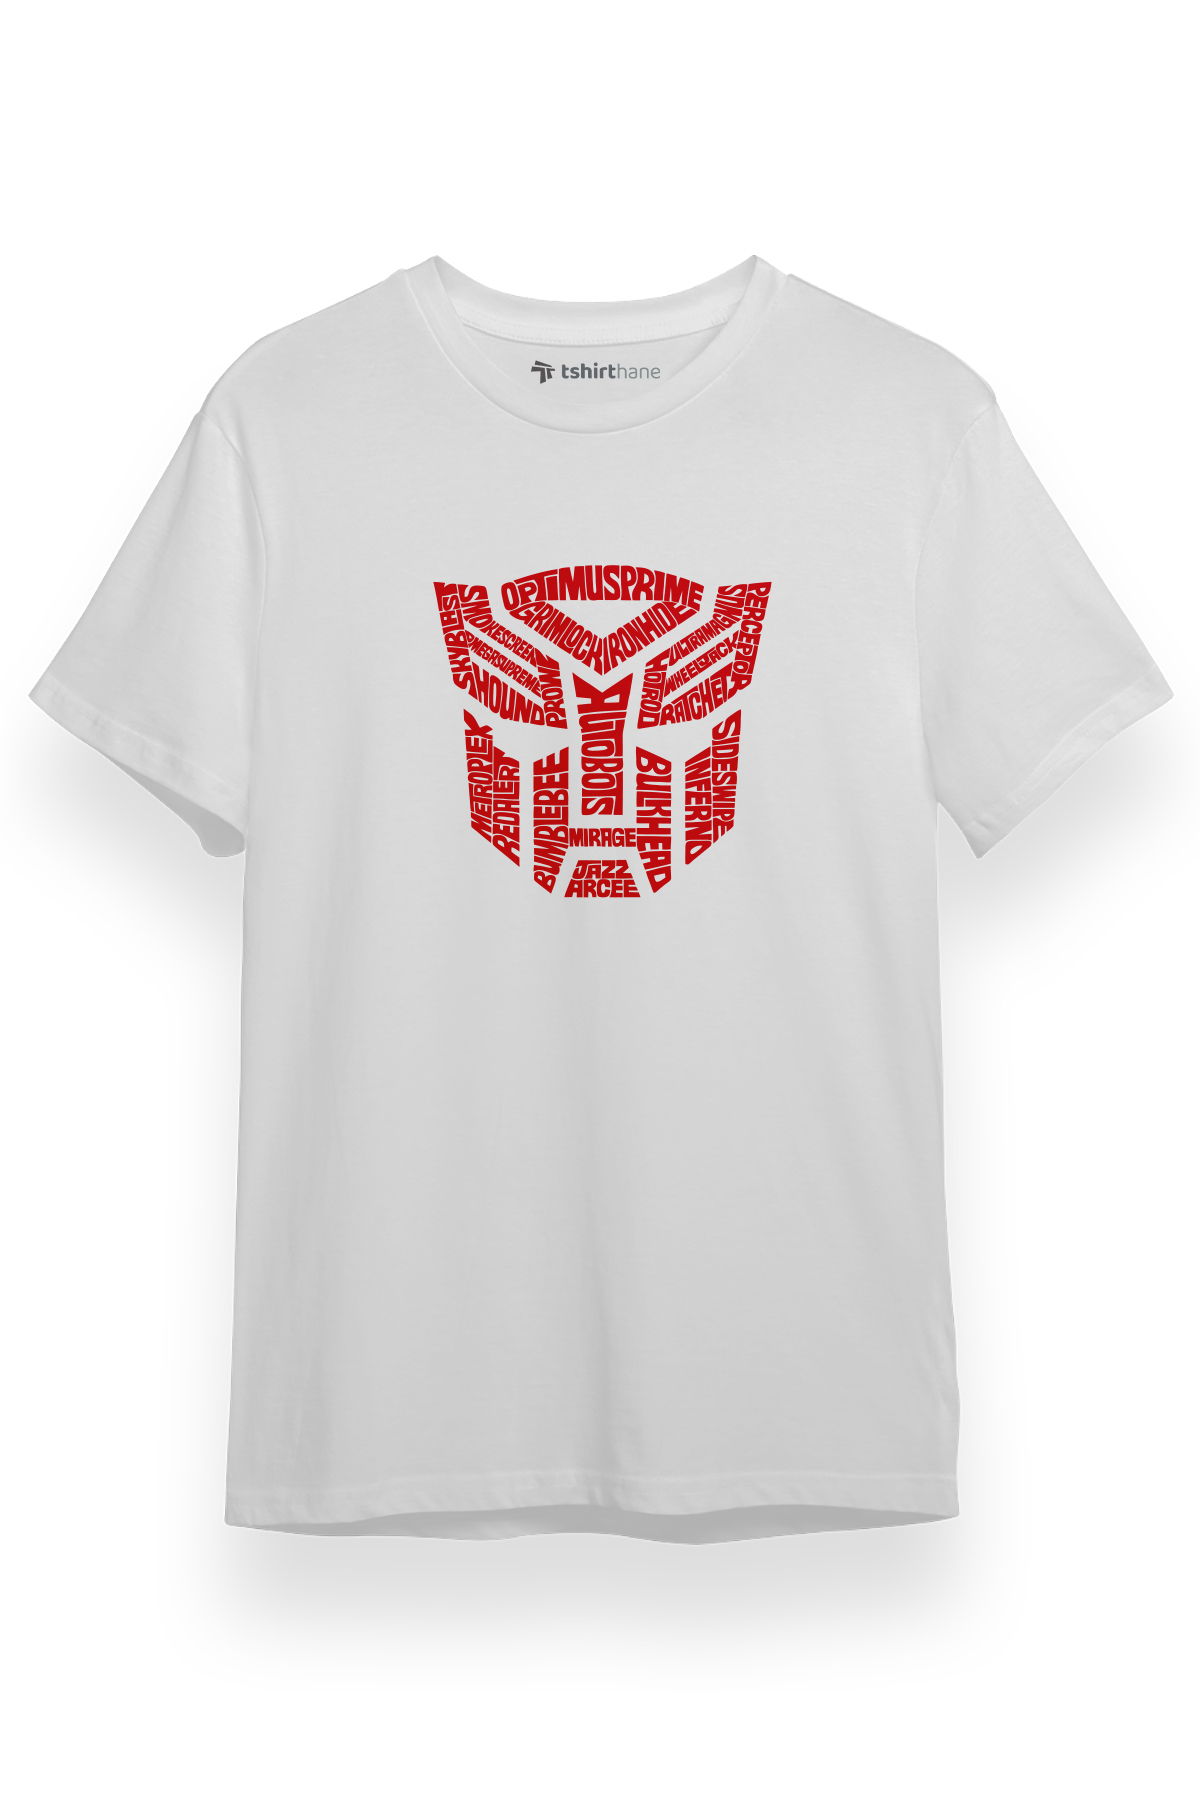 Transformers Autobots Logo Beyaz Kısa kol Erkek Tshirt